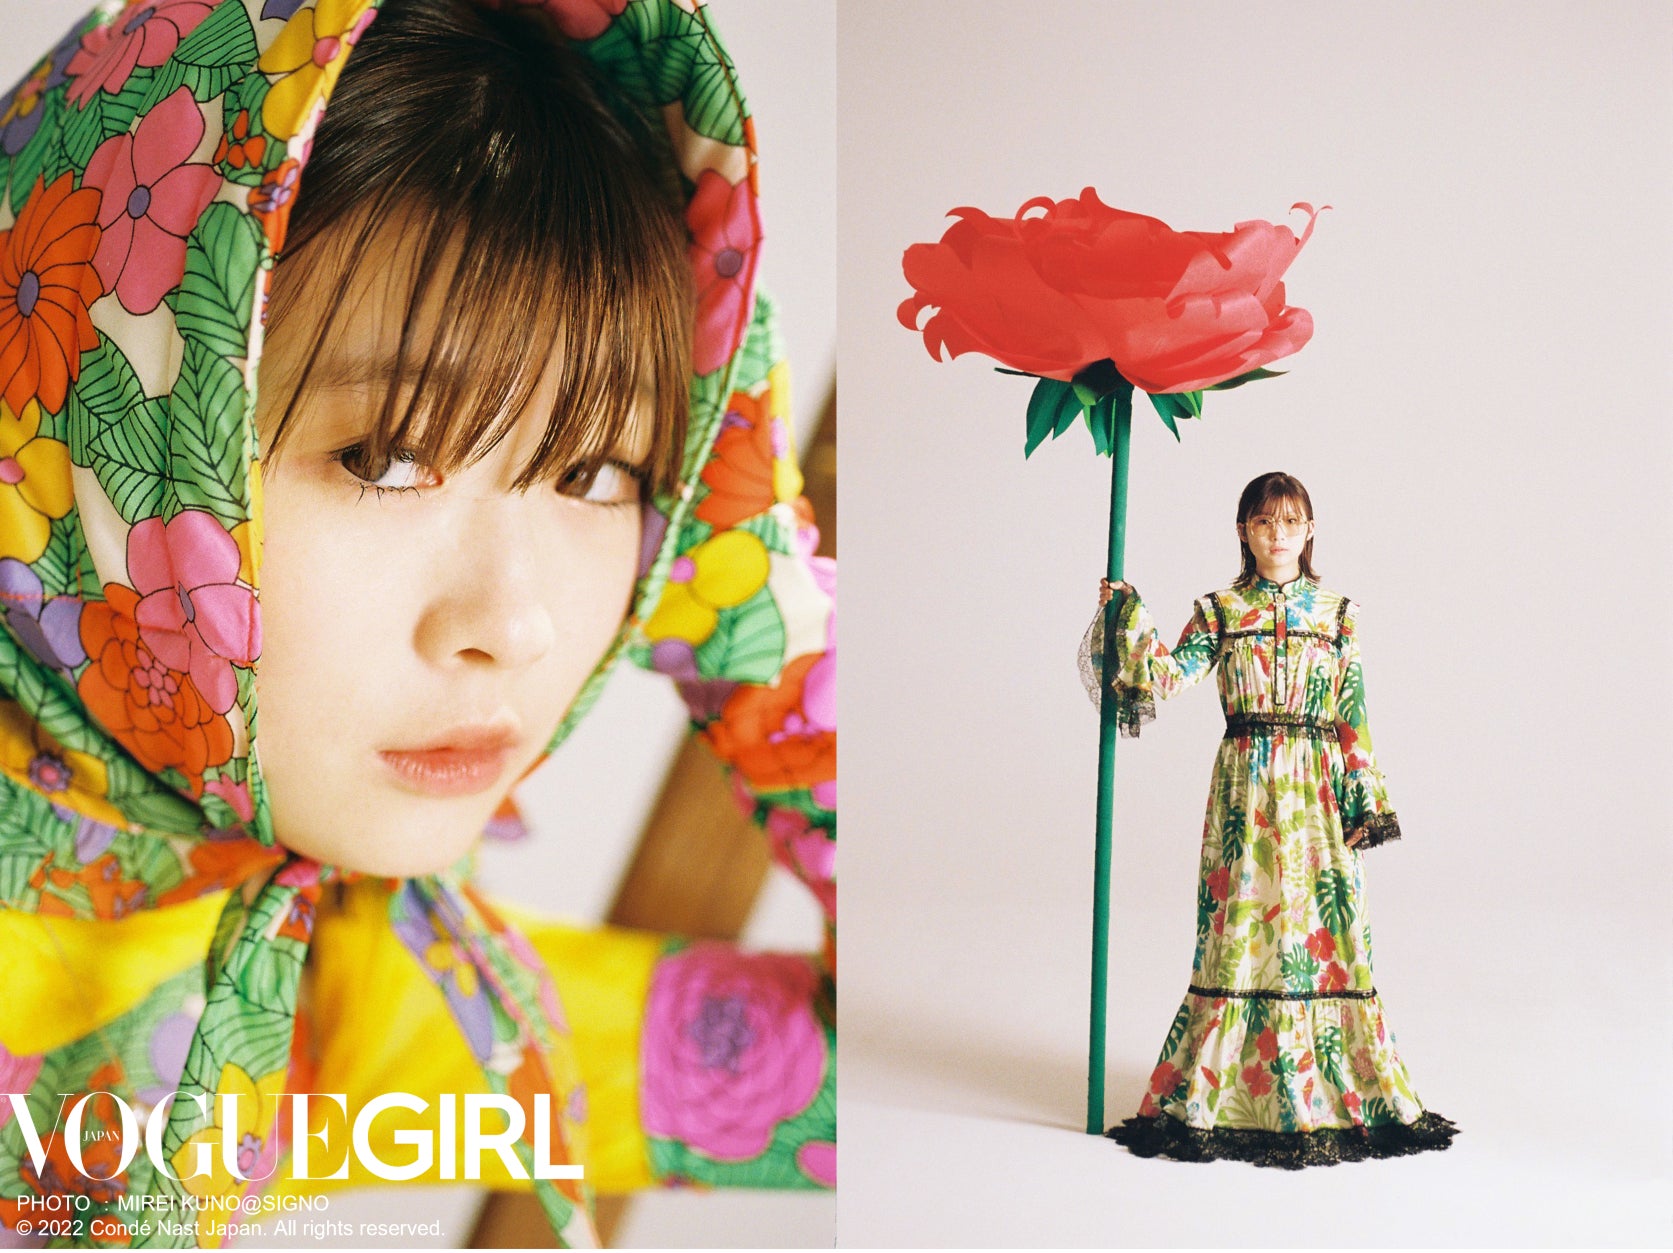 『VOGUE GIRL』の人気企画「GIRL OF THE MONTH」に伊藤沙莉が登場！自分の個性を初夏のフラワーに重ね、カラフルでハッピーな世界を表現。のサブ画像1_VOGUE GIRL PHOTO：MIREI KUNO@SIGNO © 2022 Condé Nast Japan. All rights reserved.